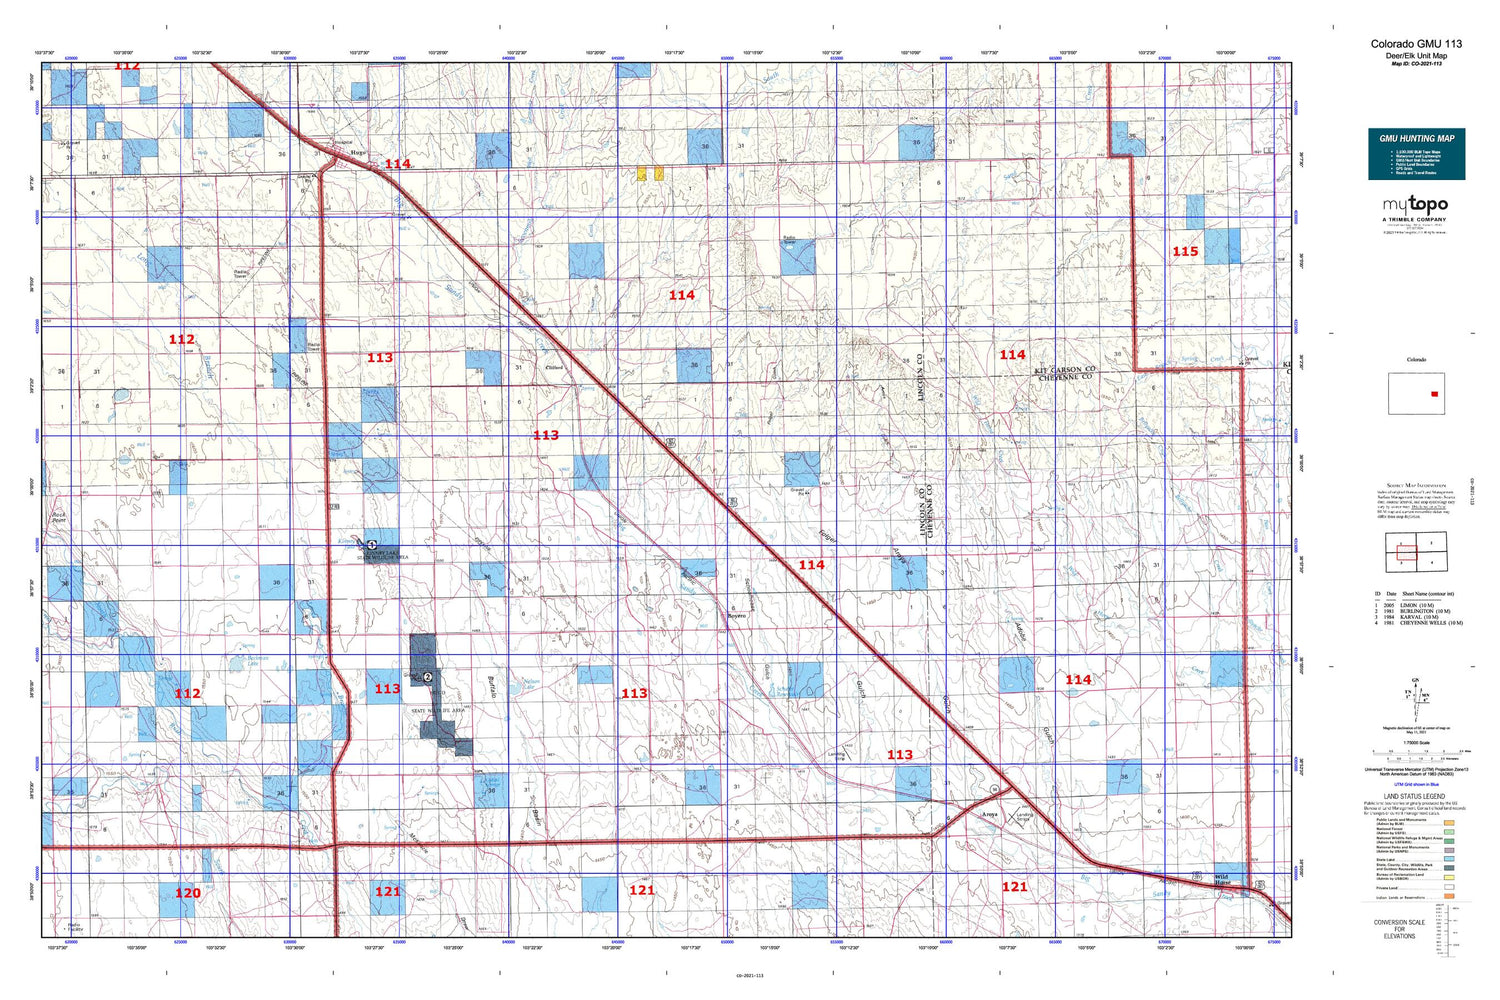 Colorado GMU 113 Map Image